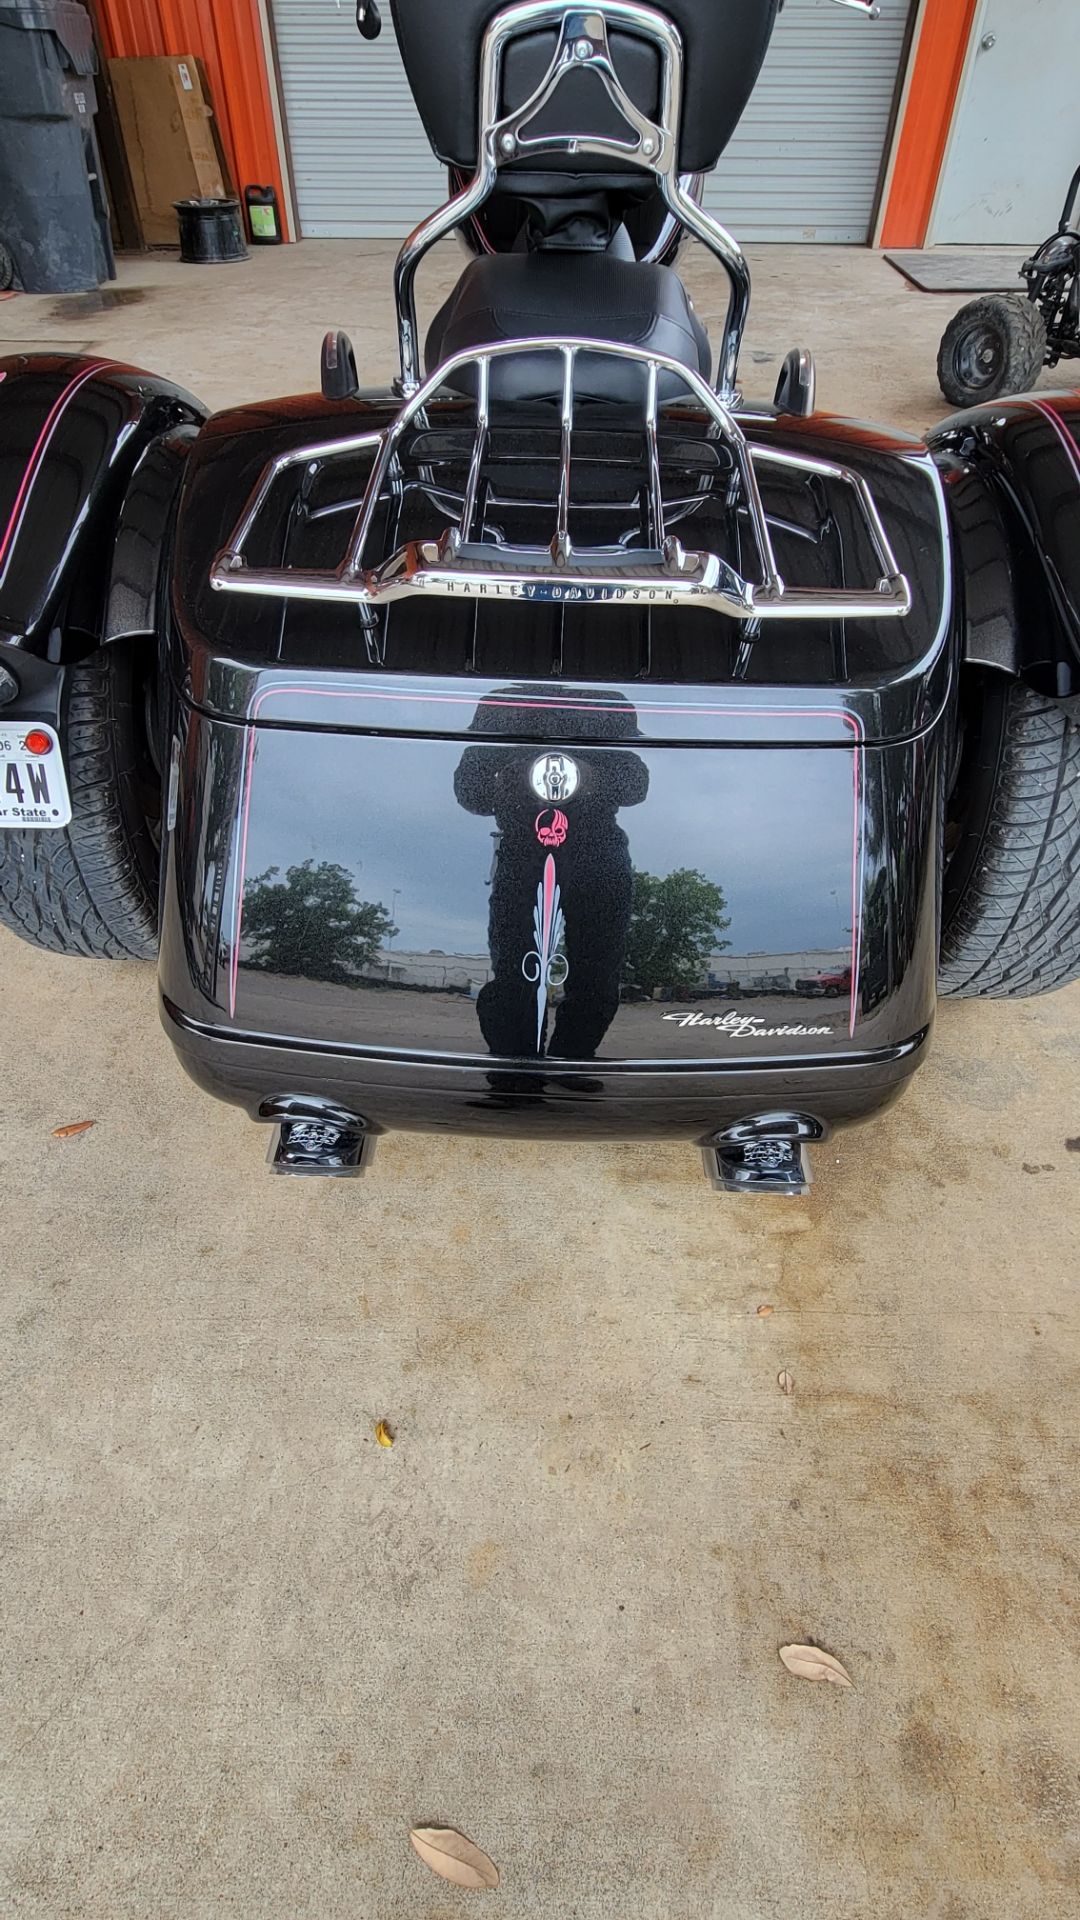 2016 Harley-Davidson free wheeler in Waco, Texas - Photo 4